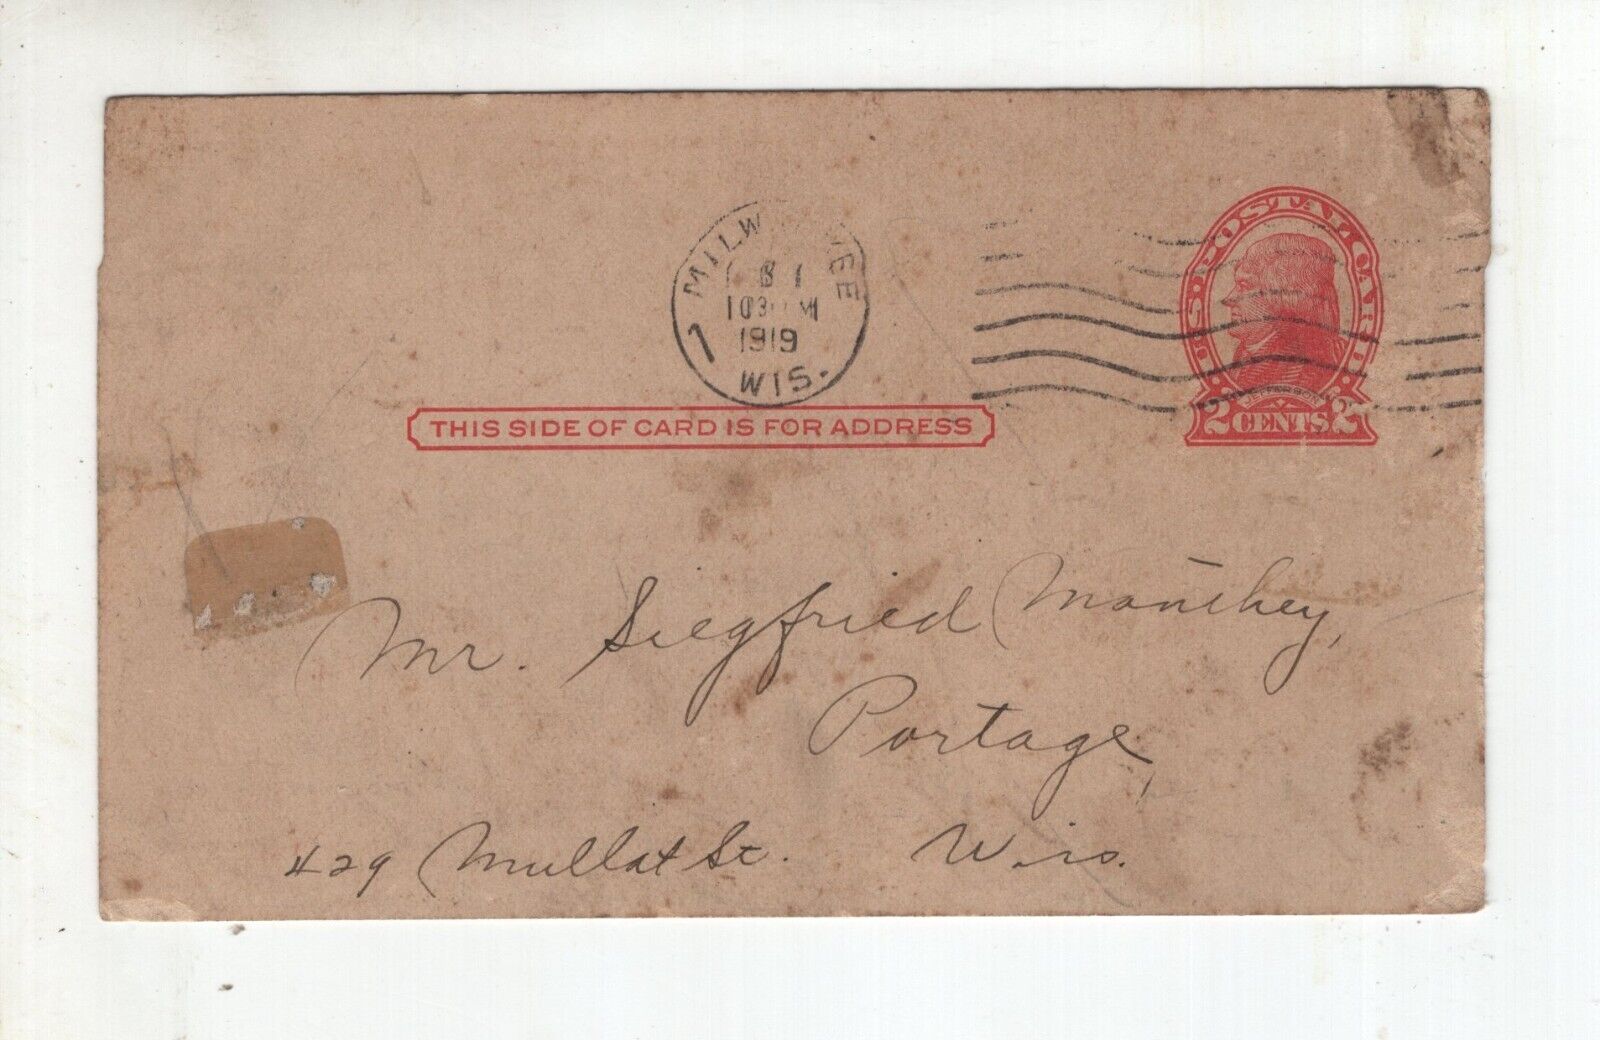 Antique United States Postal Card Addressed Siegfried Manthey Portage Wis.  1919